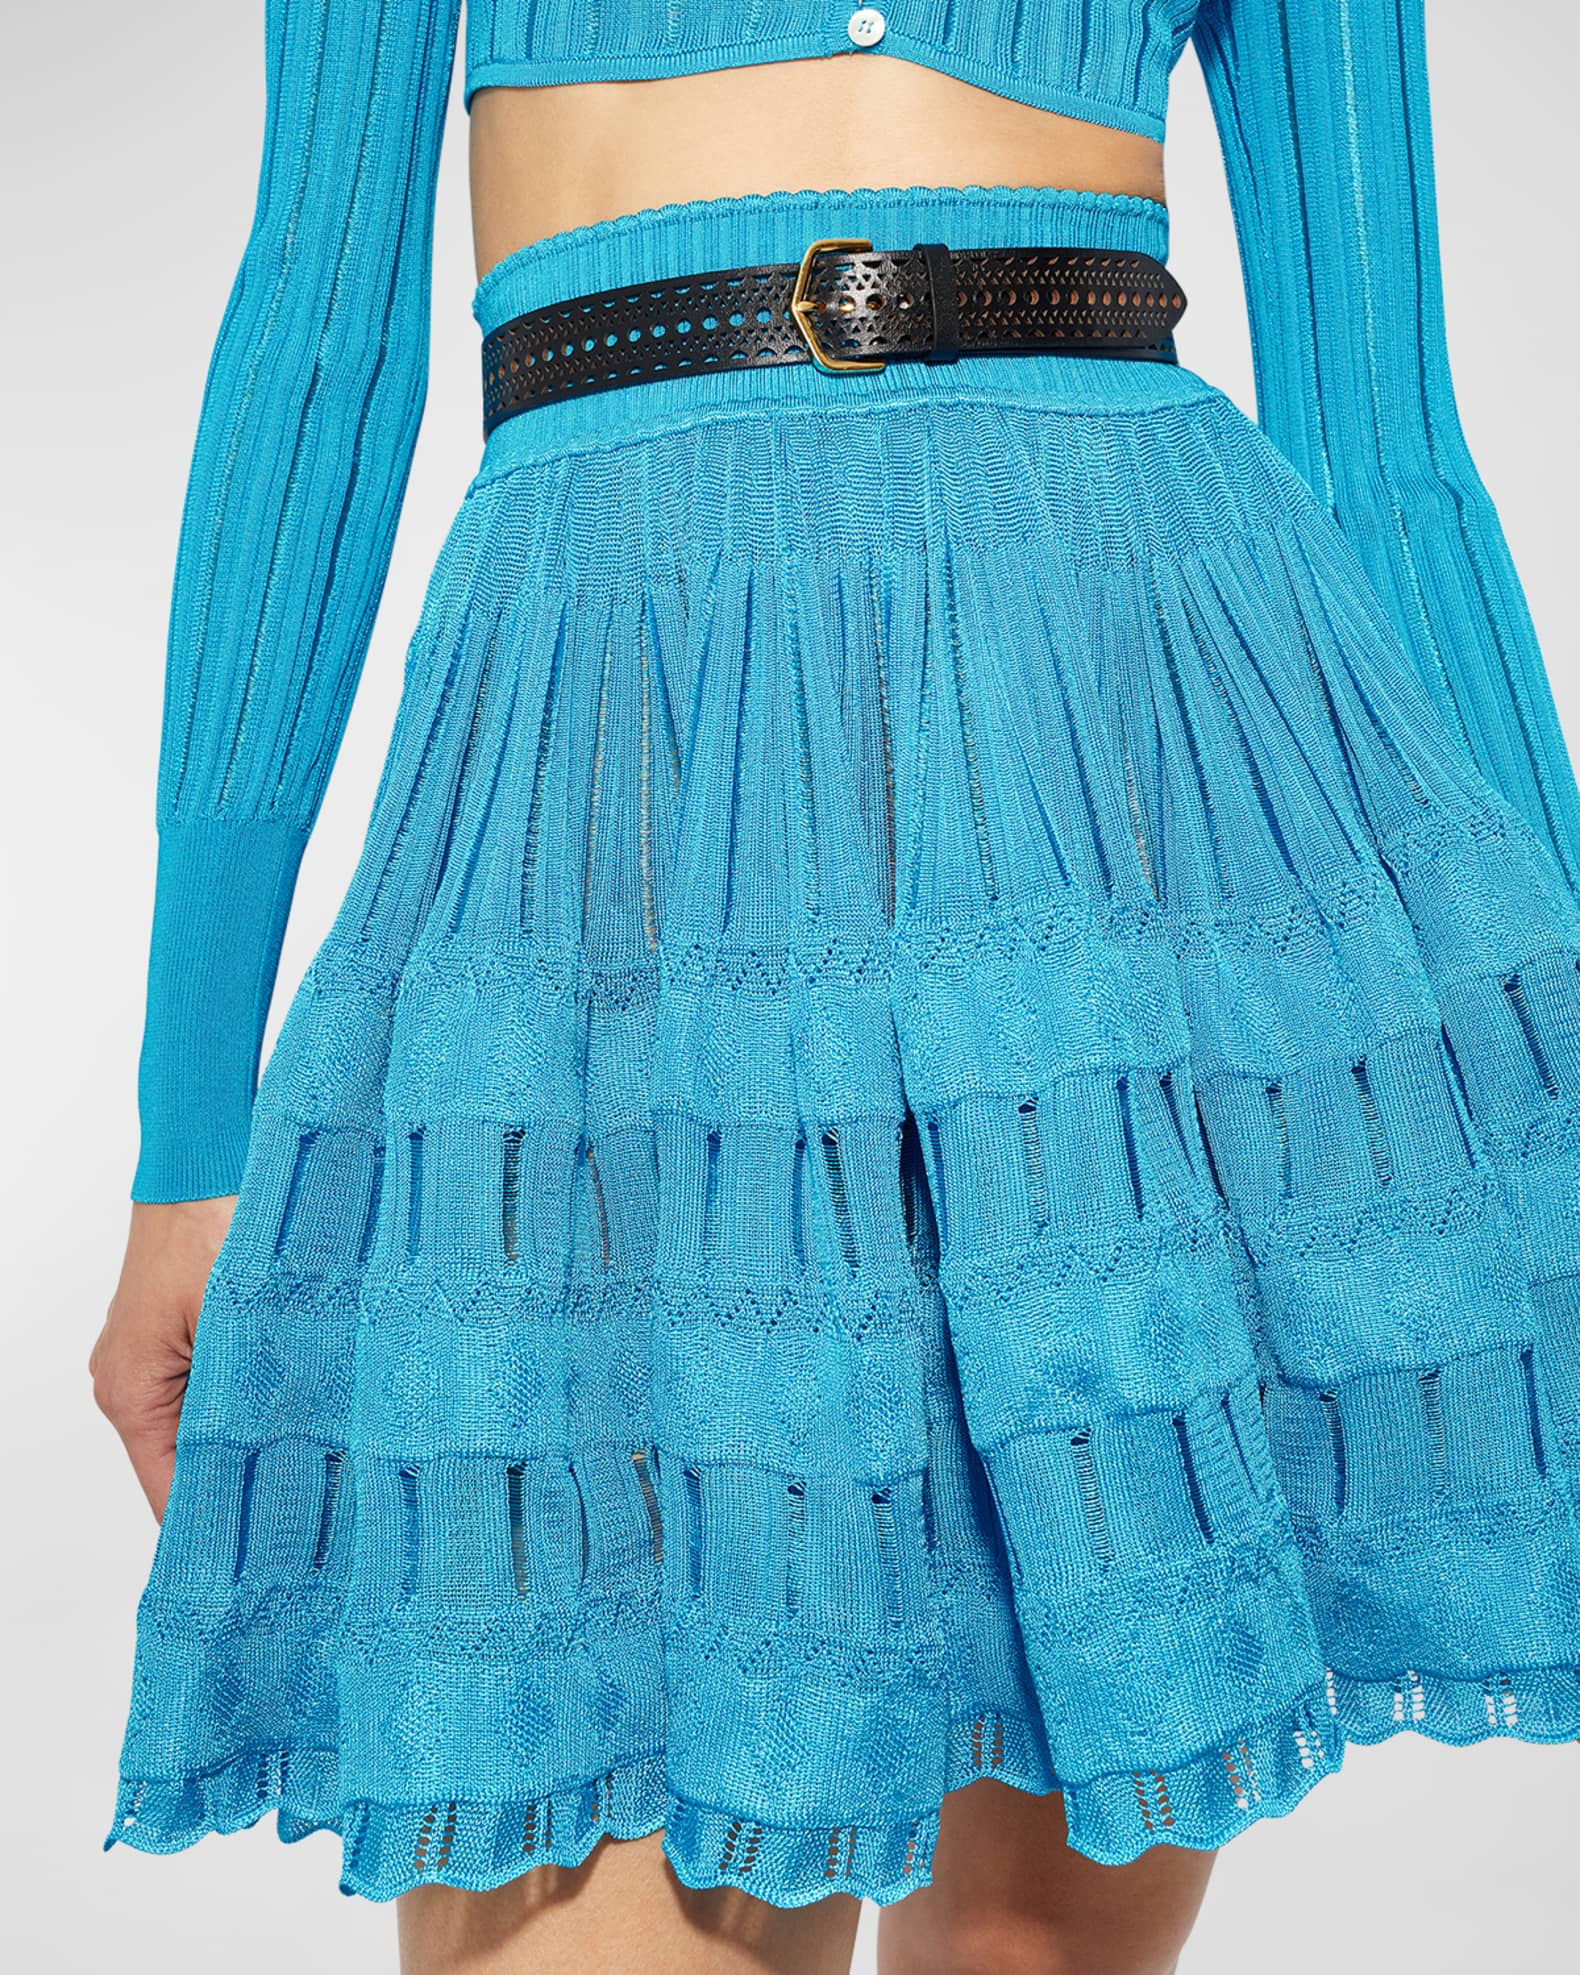 Nala Ribbed Skirt Set - Burgundy, Fashion Nova, Matching Sets